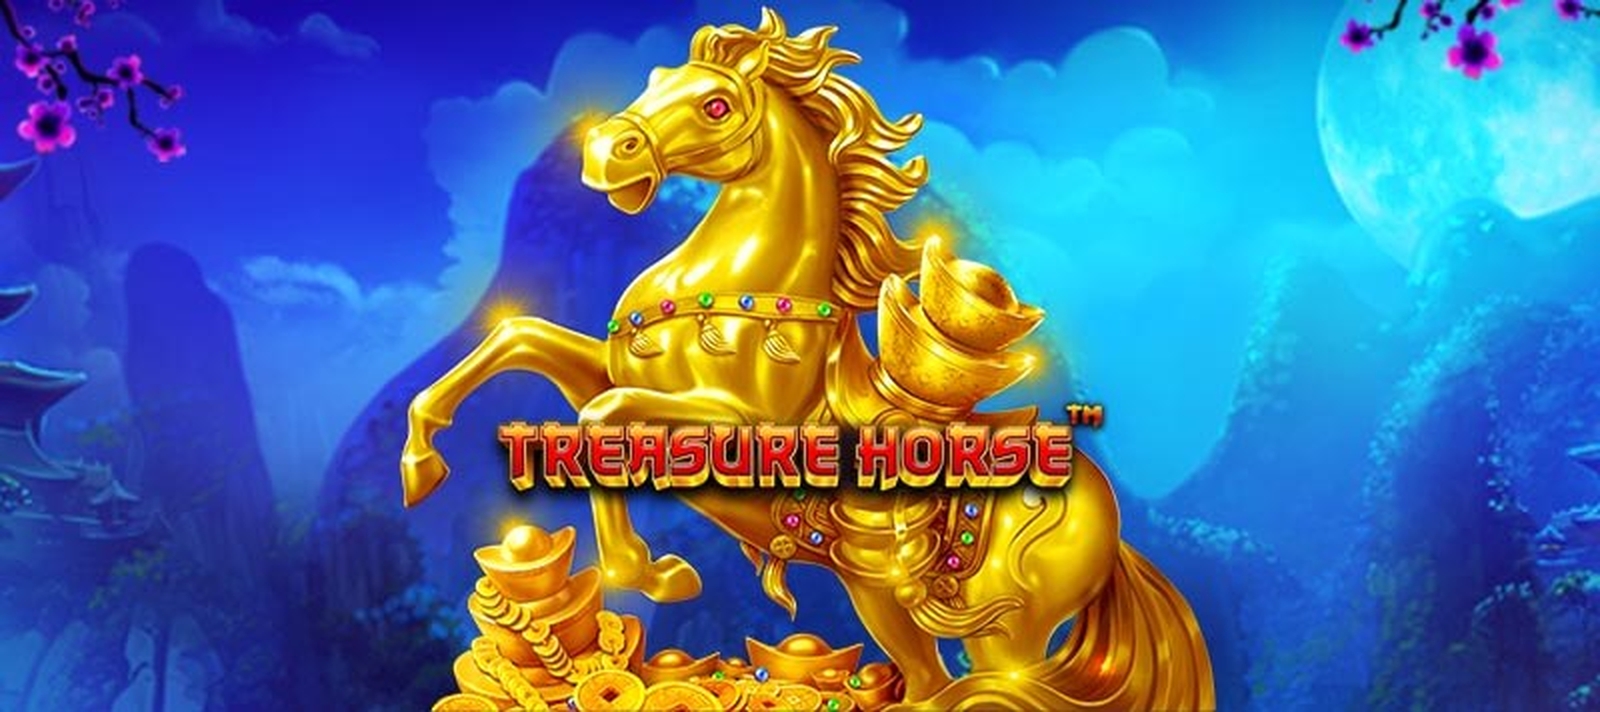 The Treasure Horse Online Slot Demo Game by Pragmatic Play